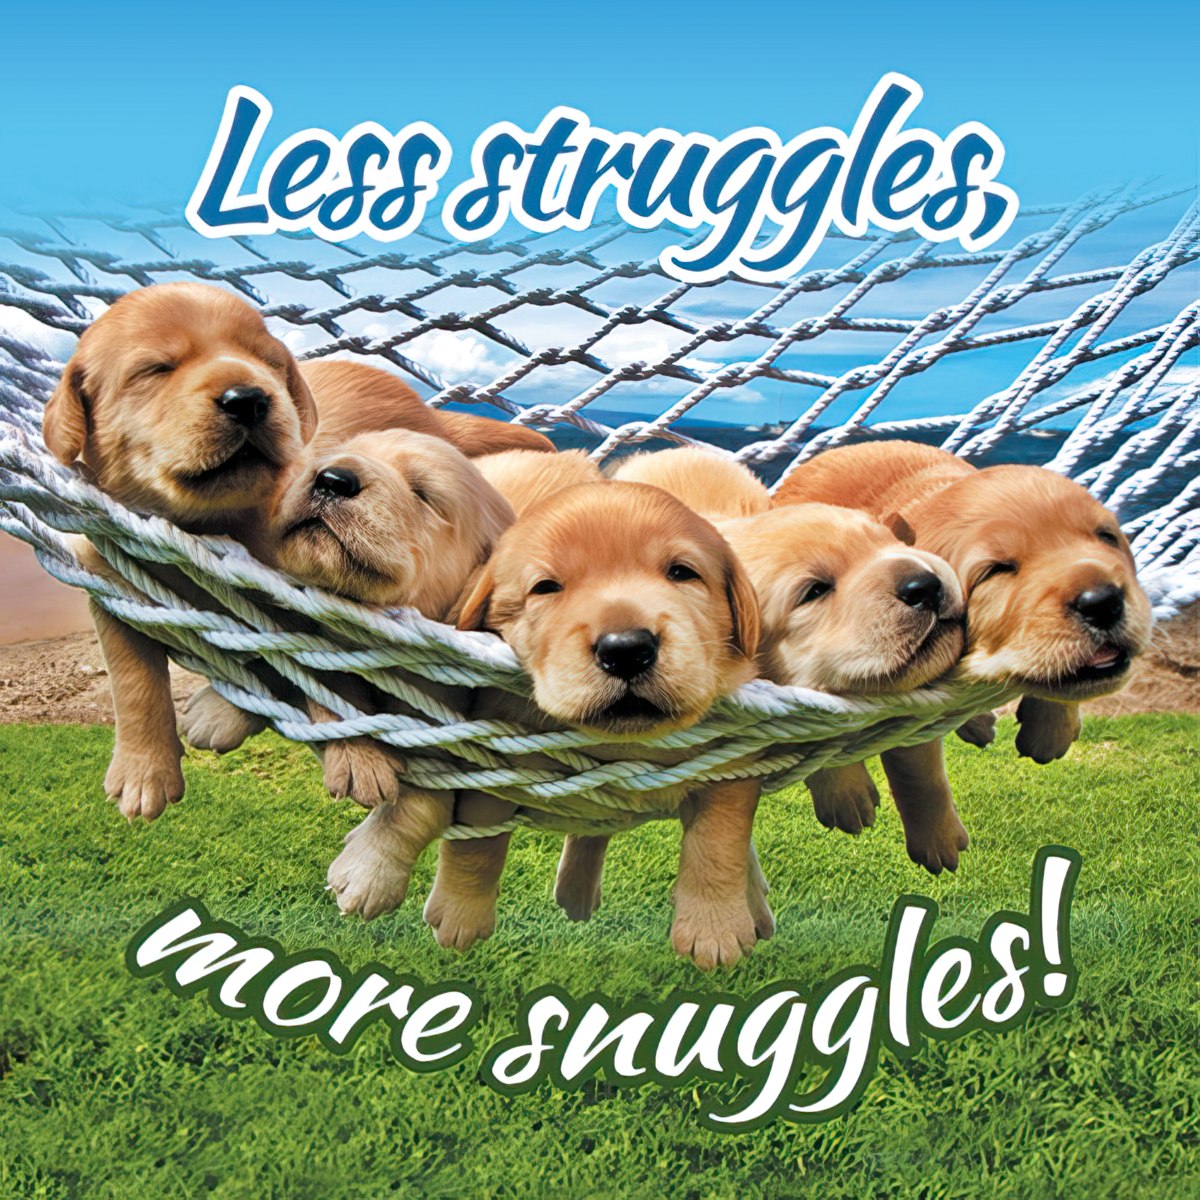 Less struggles, more snuggles!